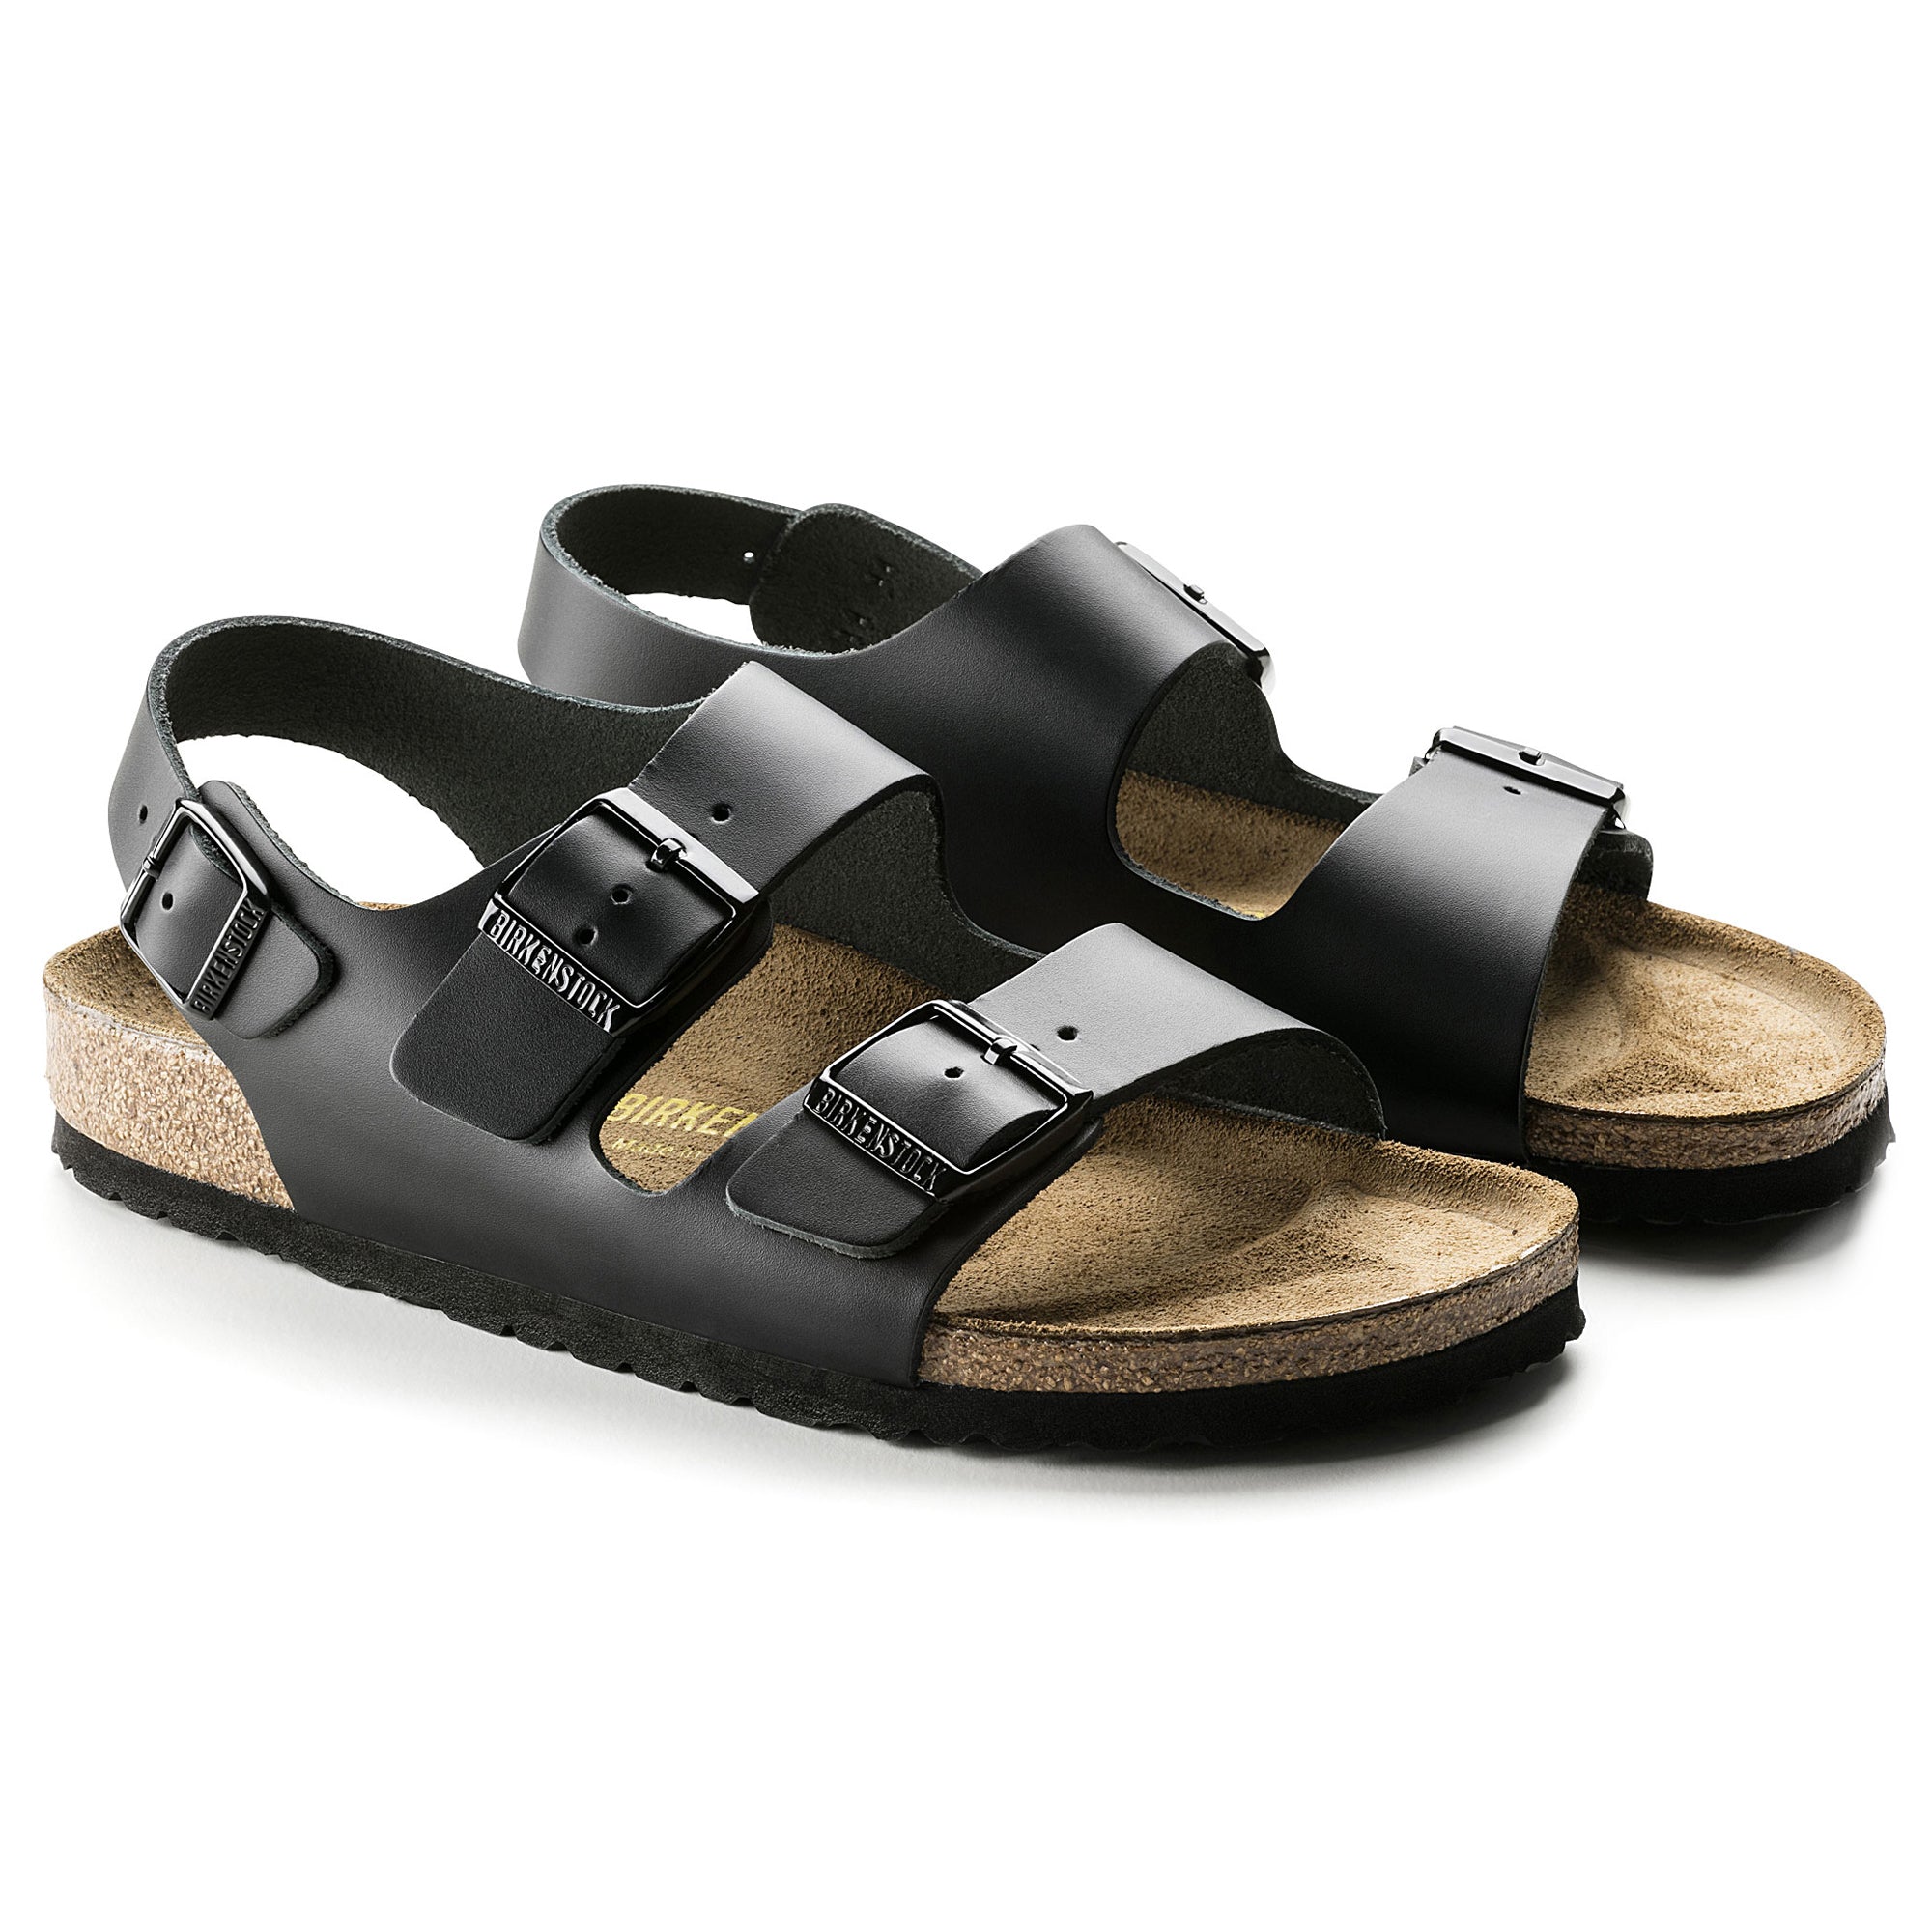 Birkenstock Milano NL Sandals - Black Leather